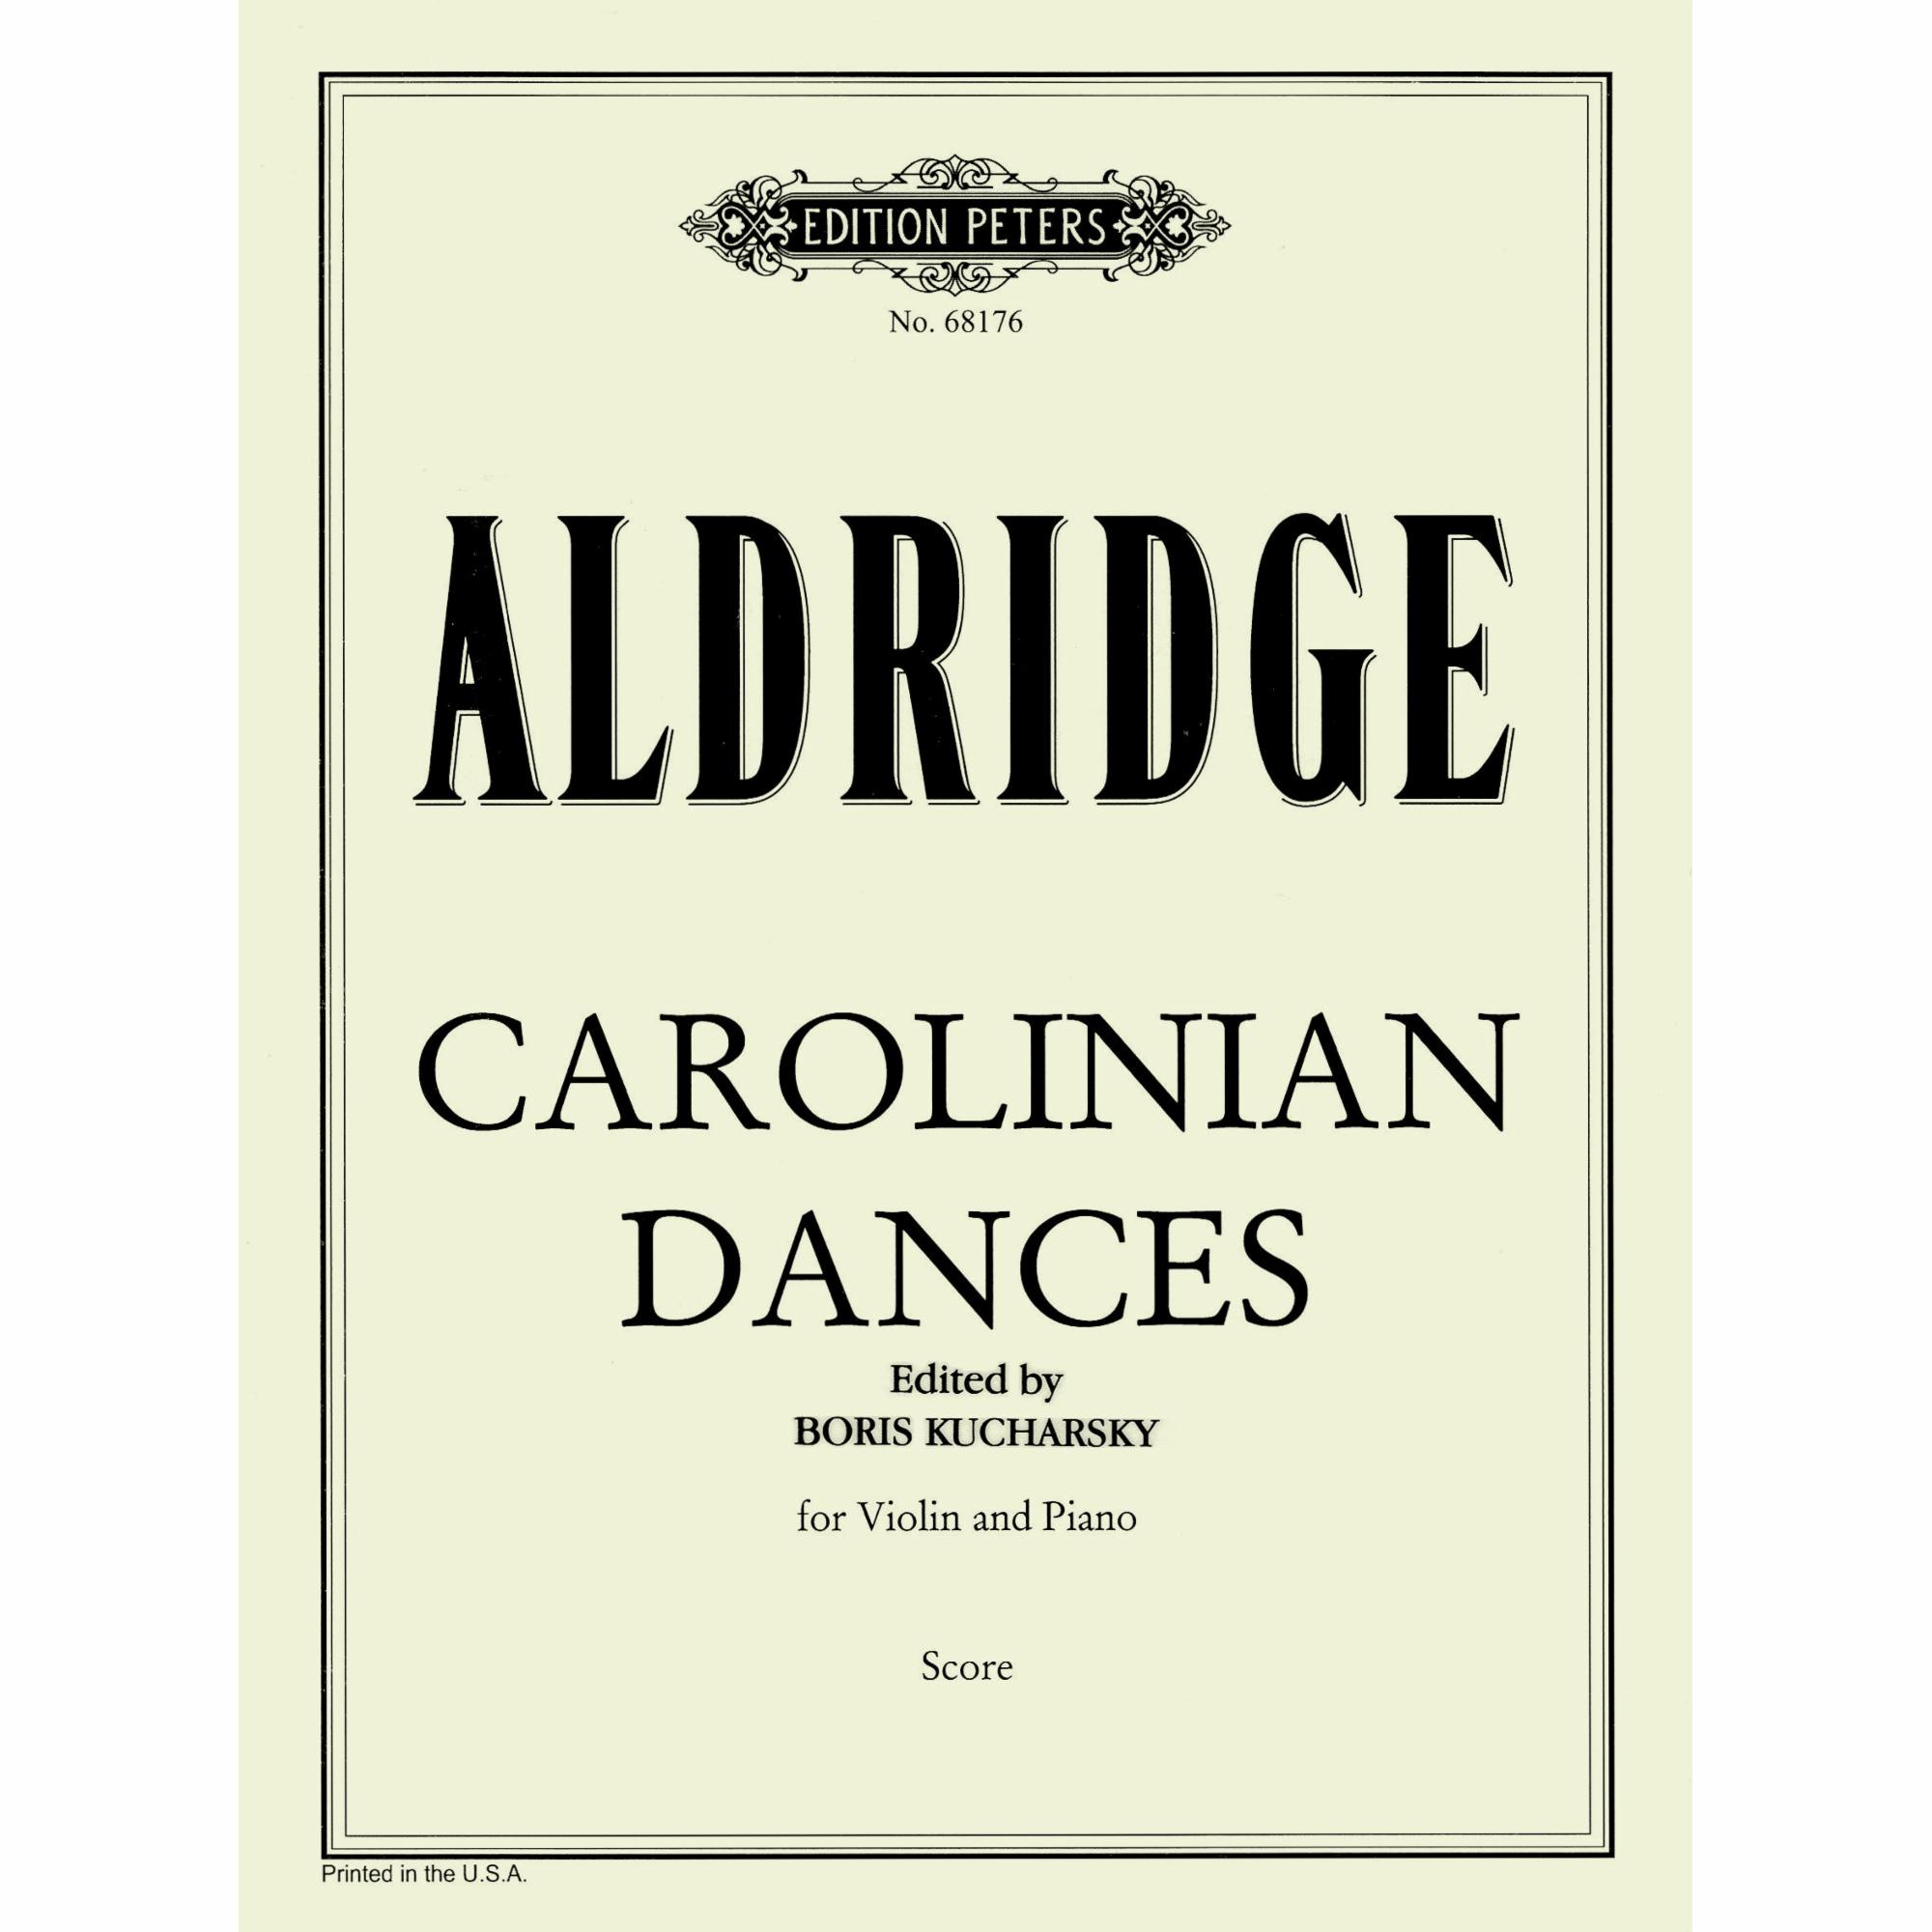 Aldridge -- Carolinian Dances for Violin and Piano